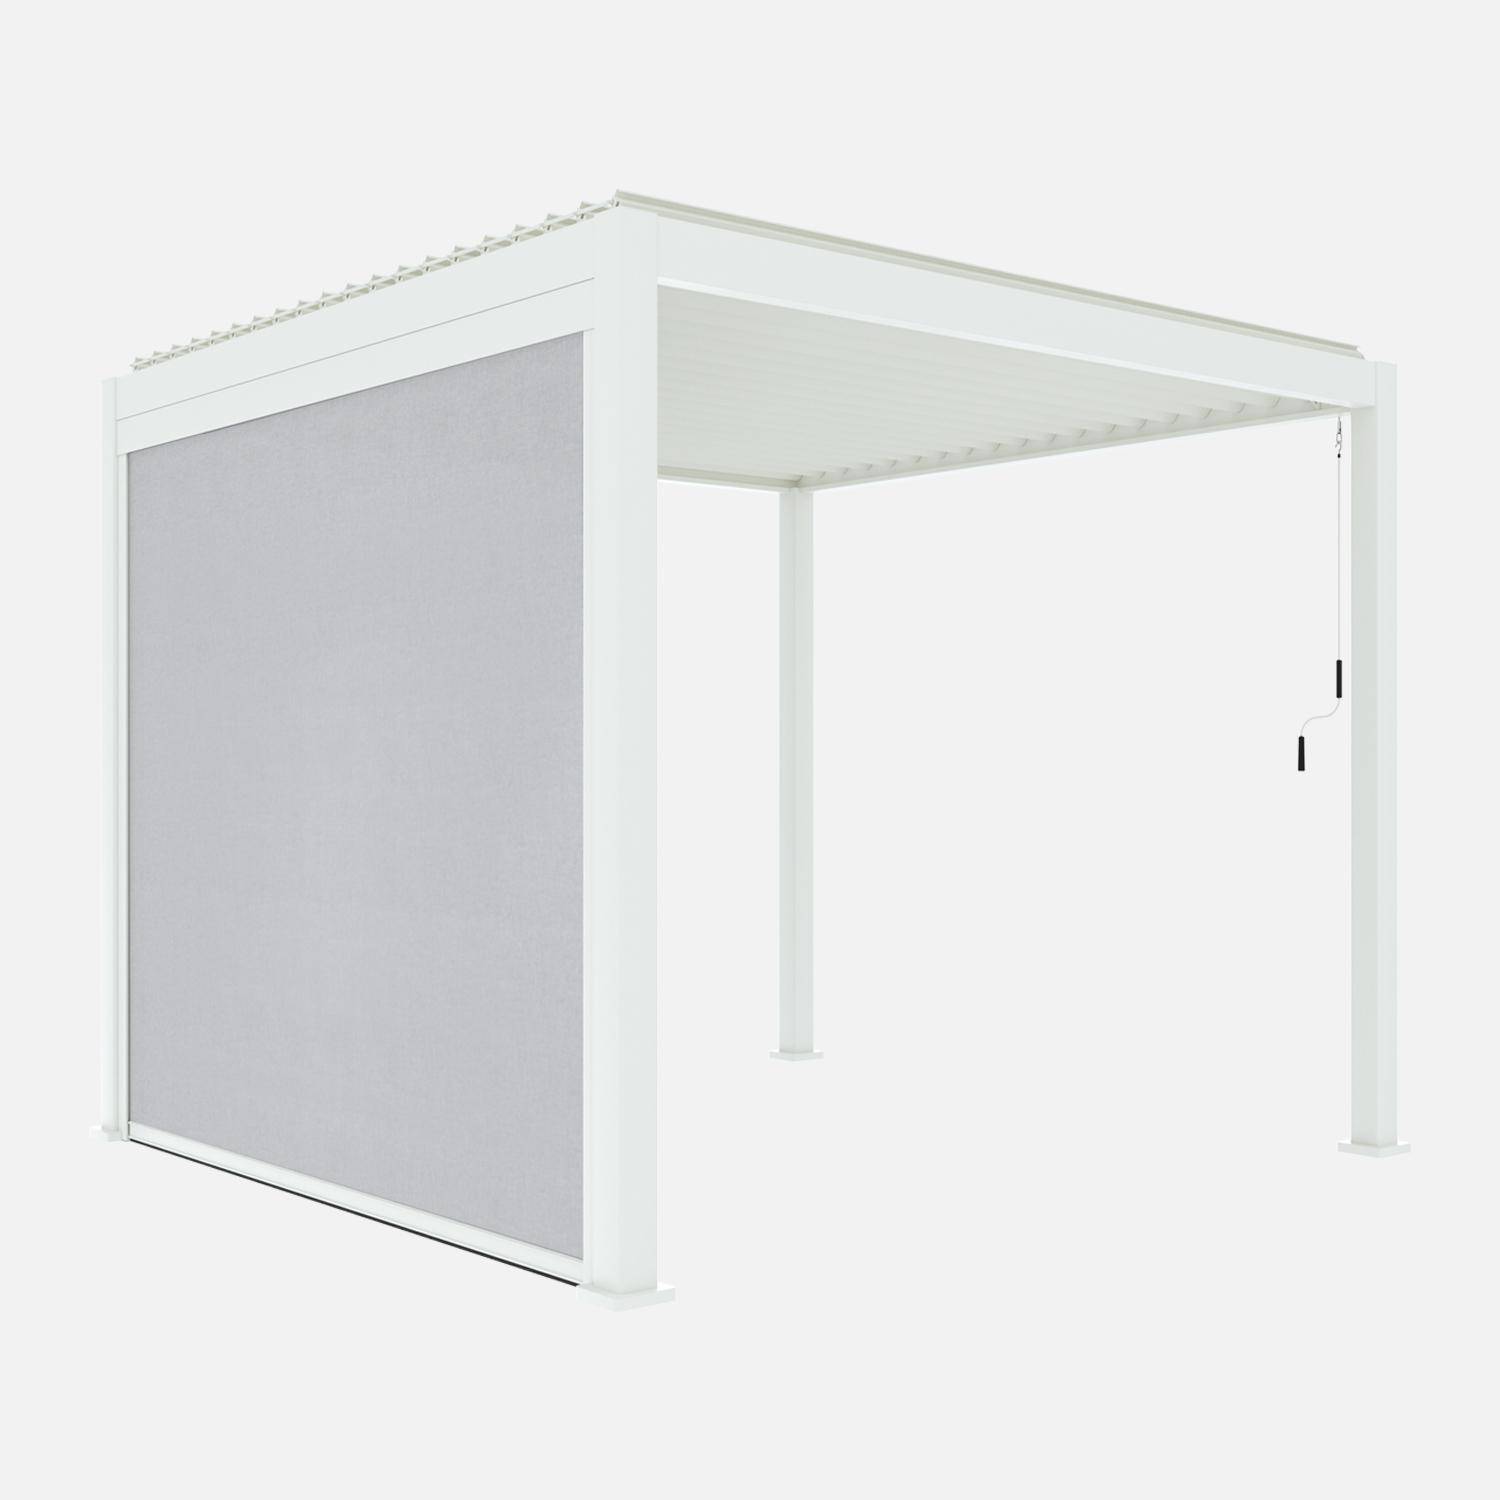 Pergola met lamellendak, wit aluminium frame en textileen luifel, Triomphe 3x3 m, verstelbare lamellen Photo4